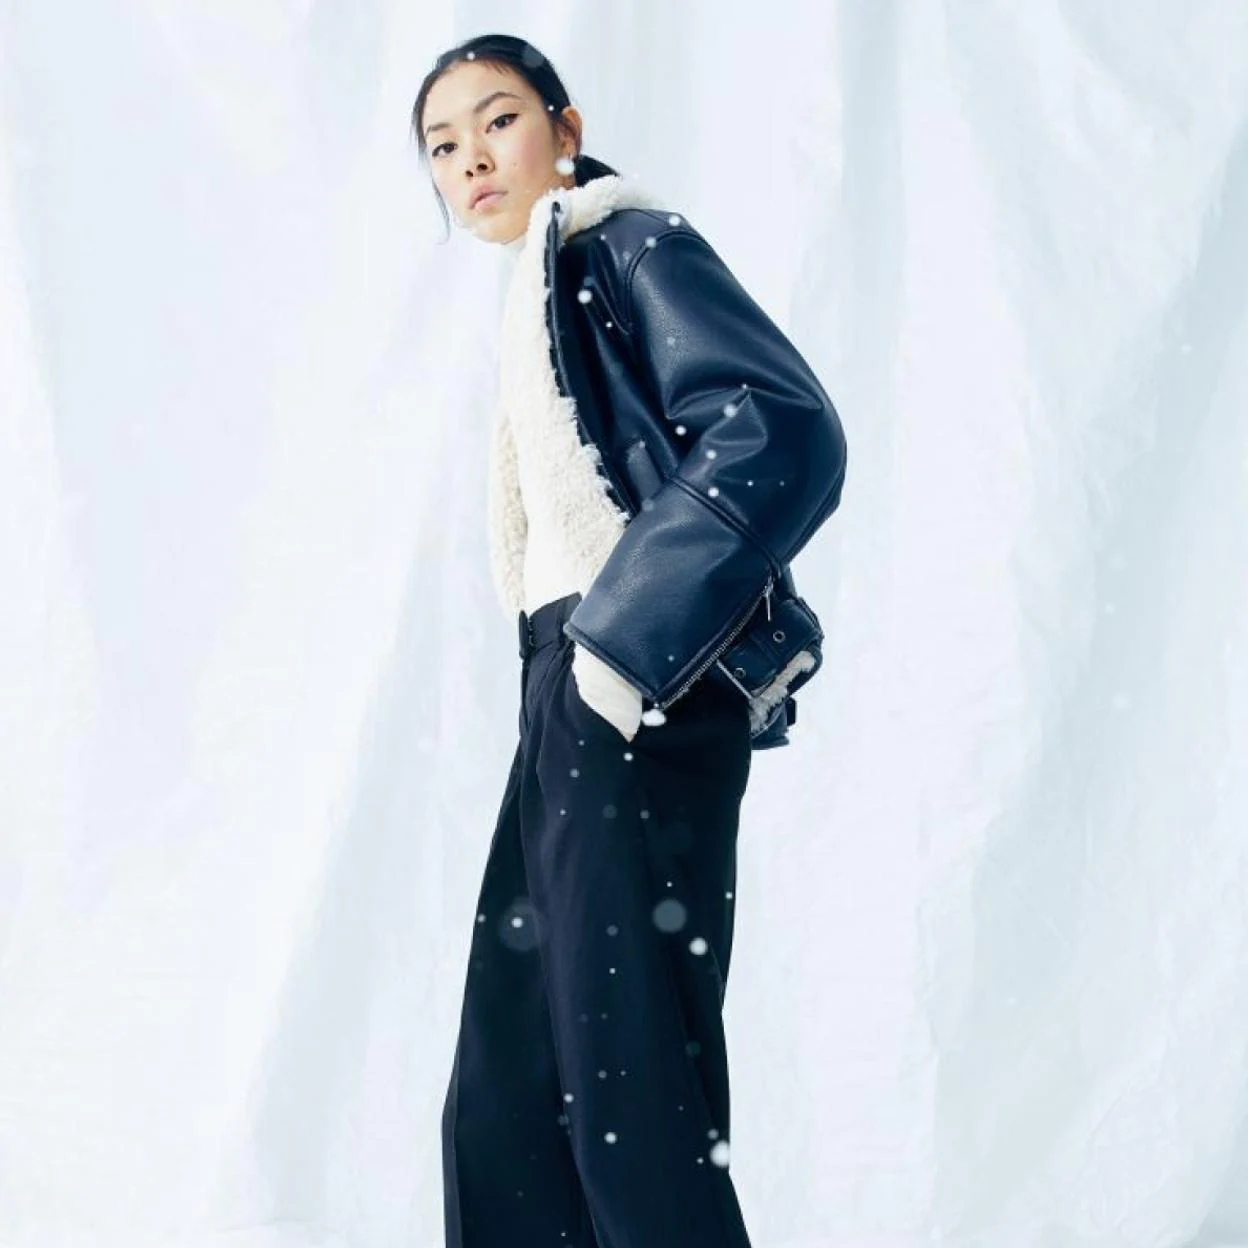 Cinco de vestir de H&M que podrás ponerte con todo porque son elegantísimos | Mujer Hoy